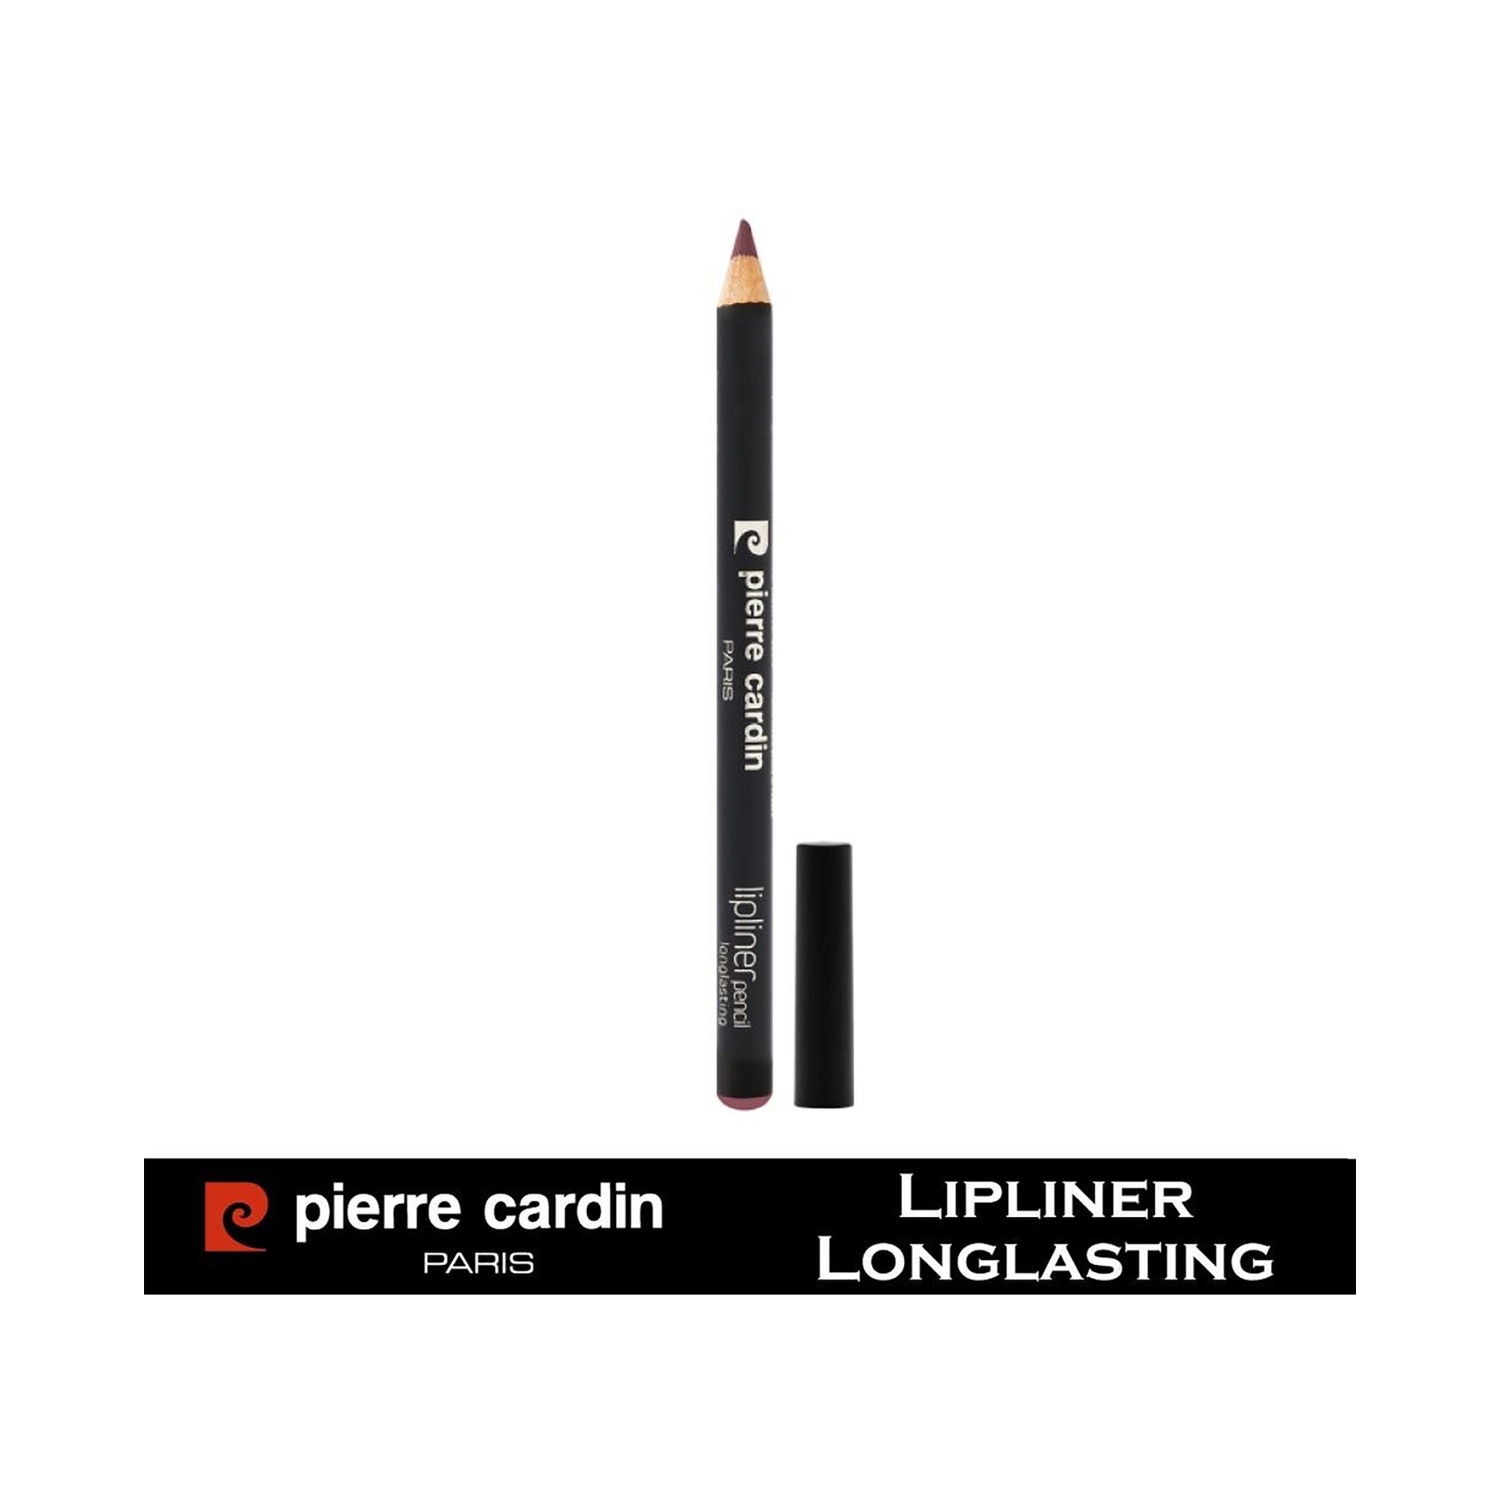 Pierre Cardin Paris | Pierre Cardin Paris Longlasting Lip Liner Pencil - 290 Light Plum (0.4g)